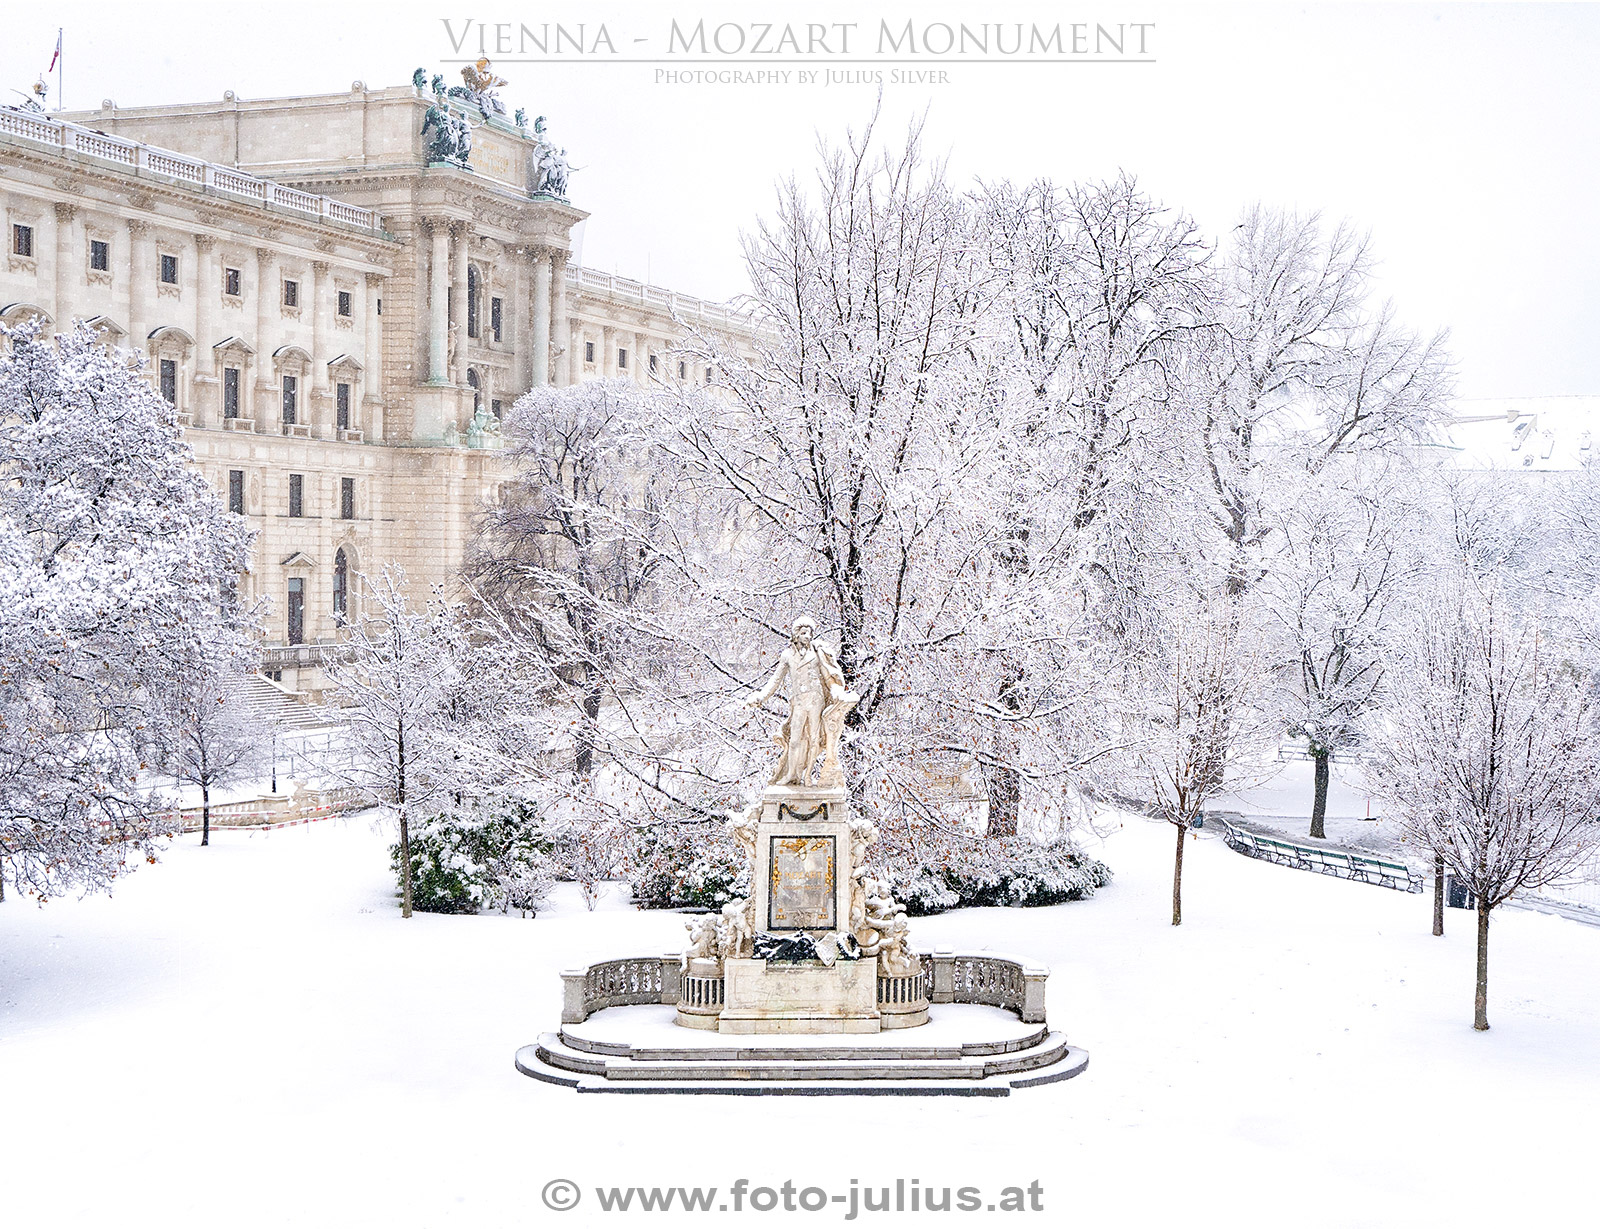 W7255a_Burggarten_Mozart_Monument.jpg, 810kB